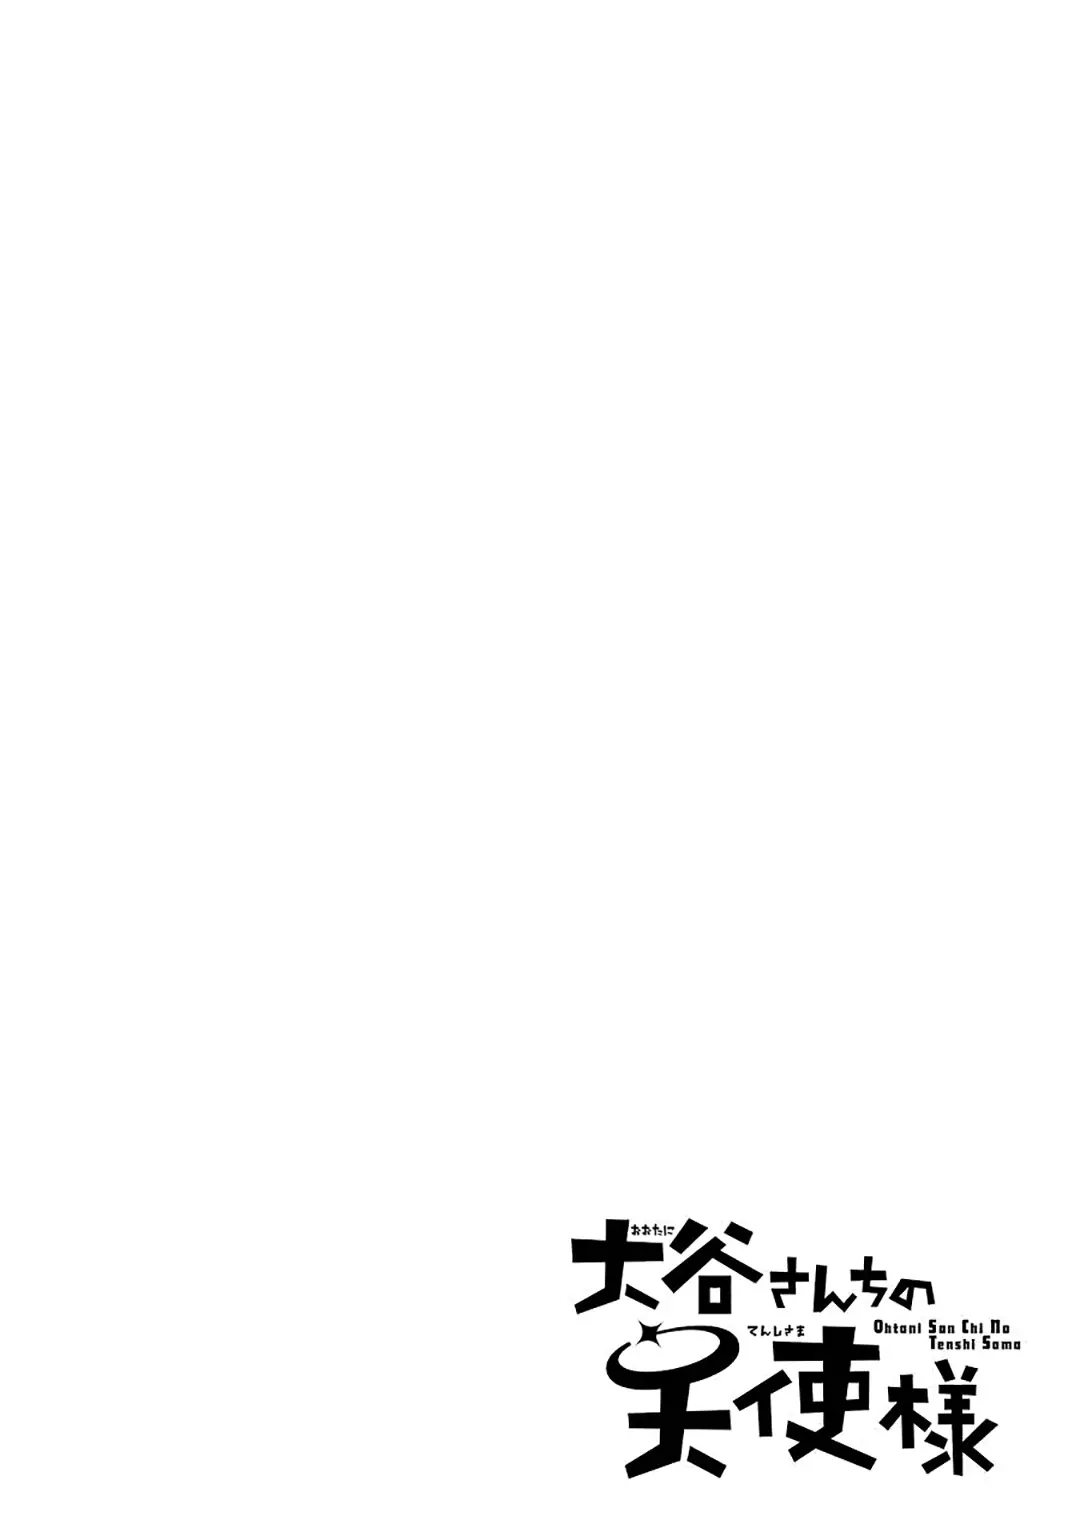 Ootani-San Chi No Tenshi-Sama - 11 page 16